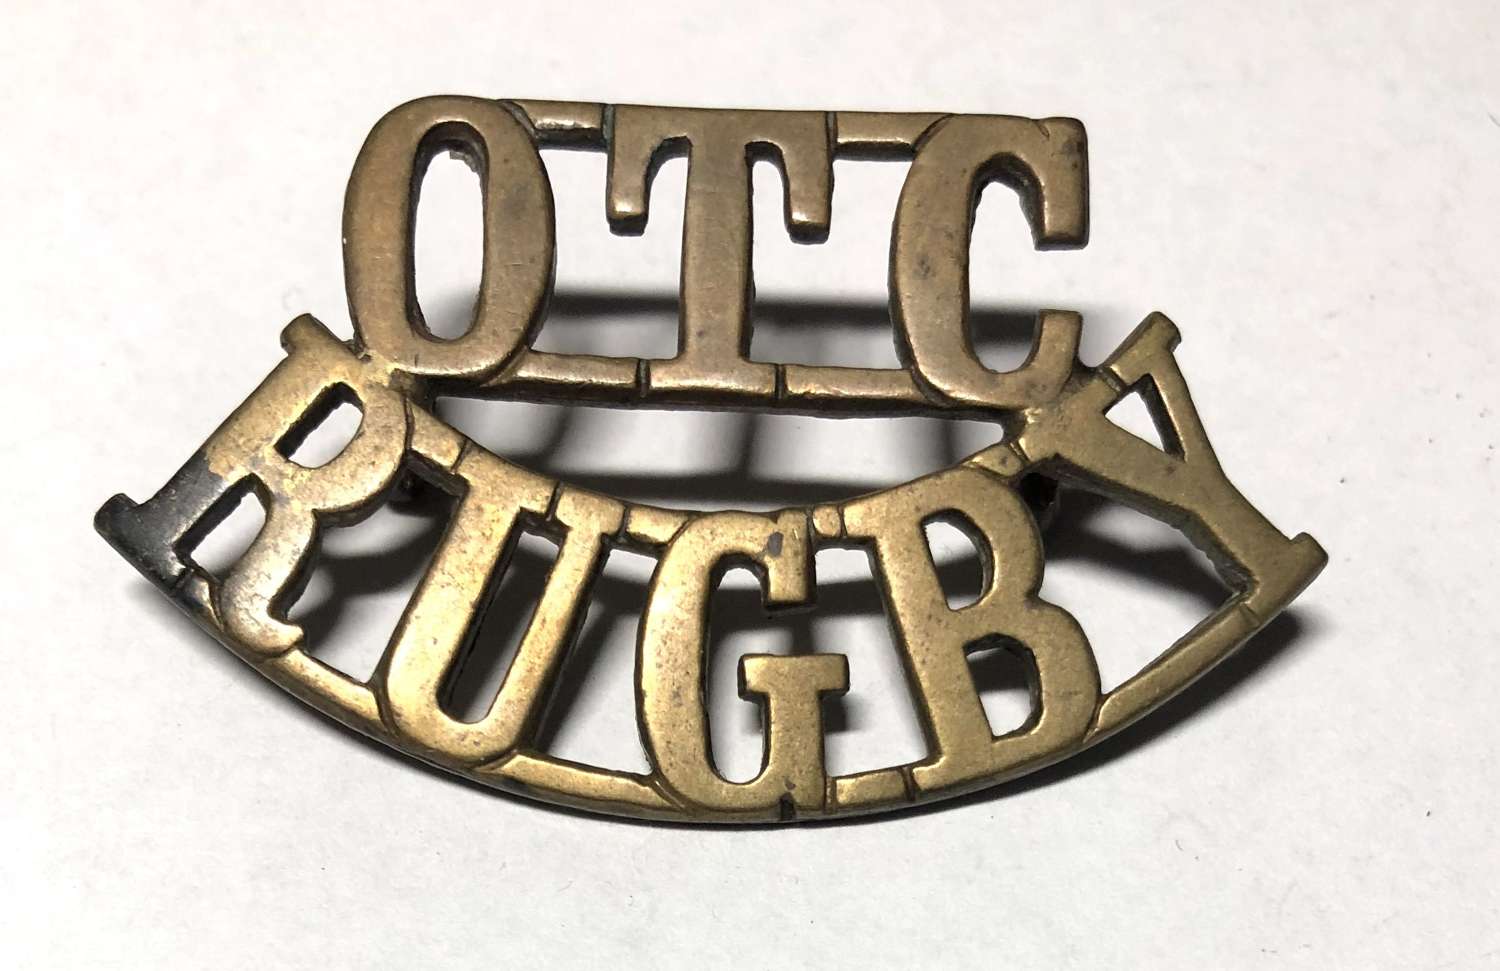 OTC / RUGBY shoulder title circa 1908-40